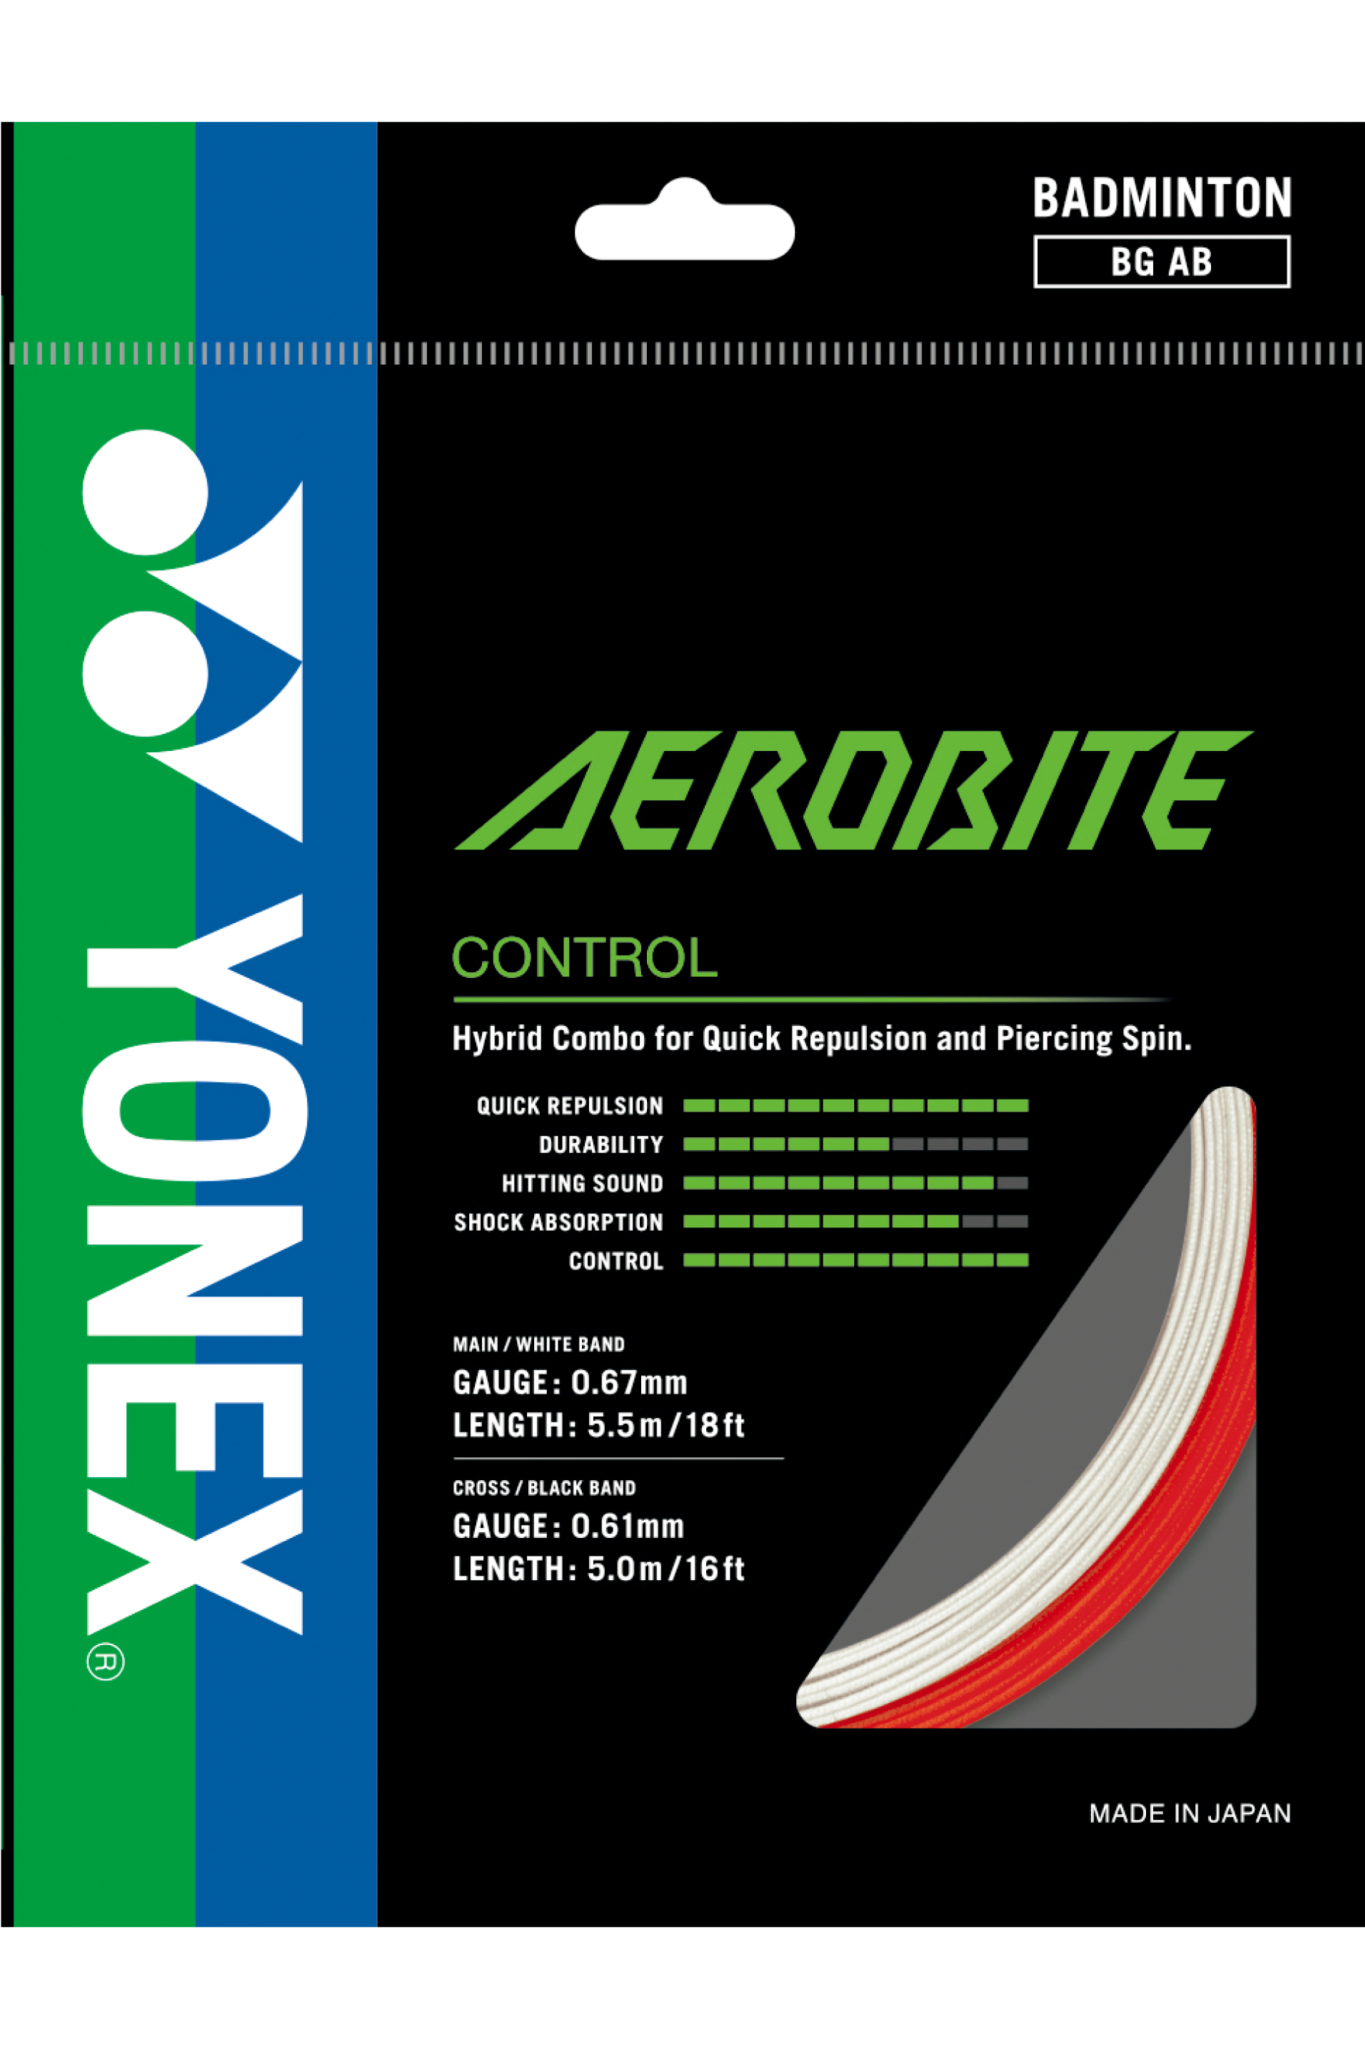 Yonex Badminton String Aerobite - 10m Set & 200m Reel - Nexus Badminton